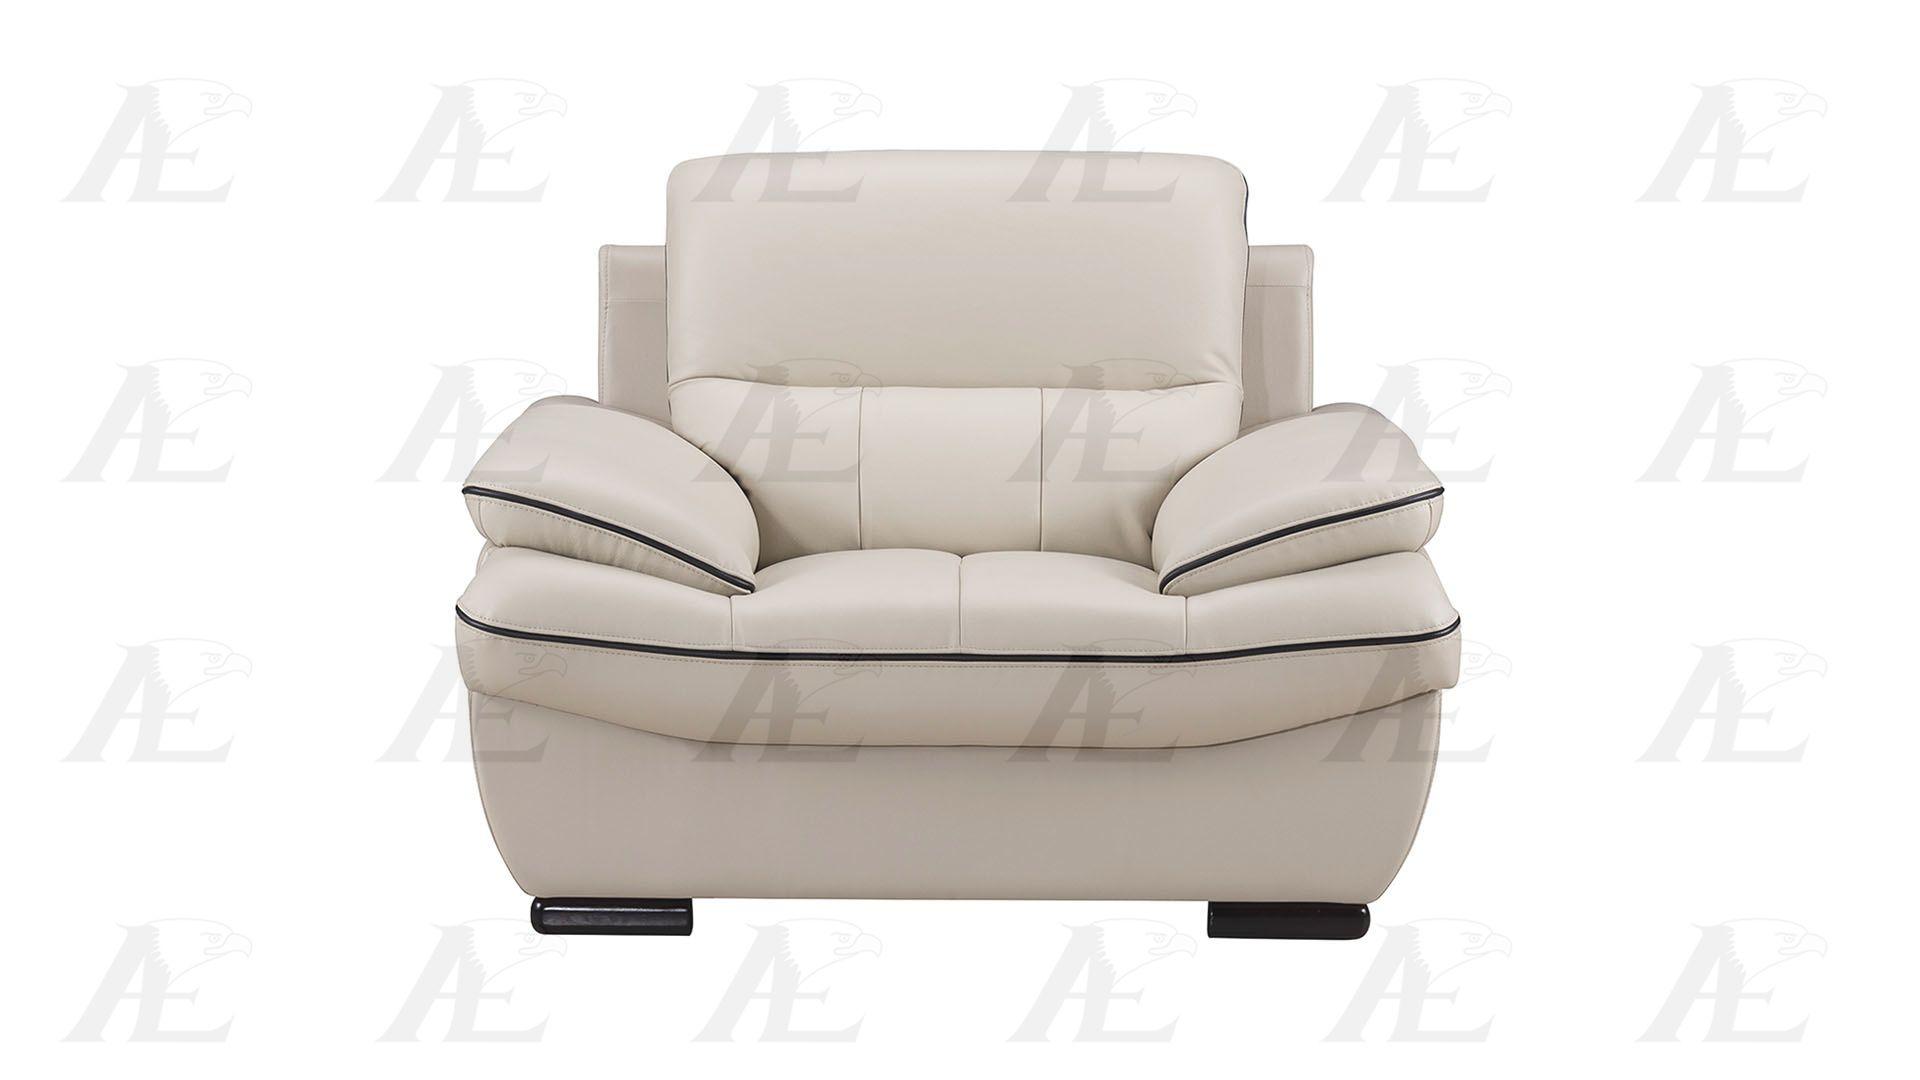 

    
EK-B305-LG-SET-3 American Eagle Furniture Sofa Set
